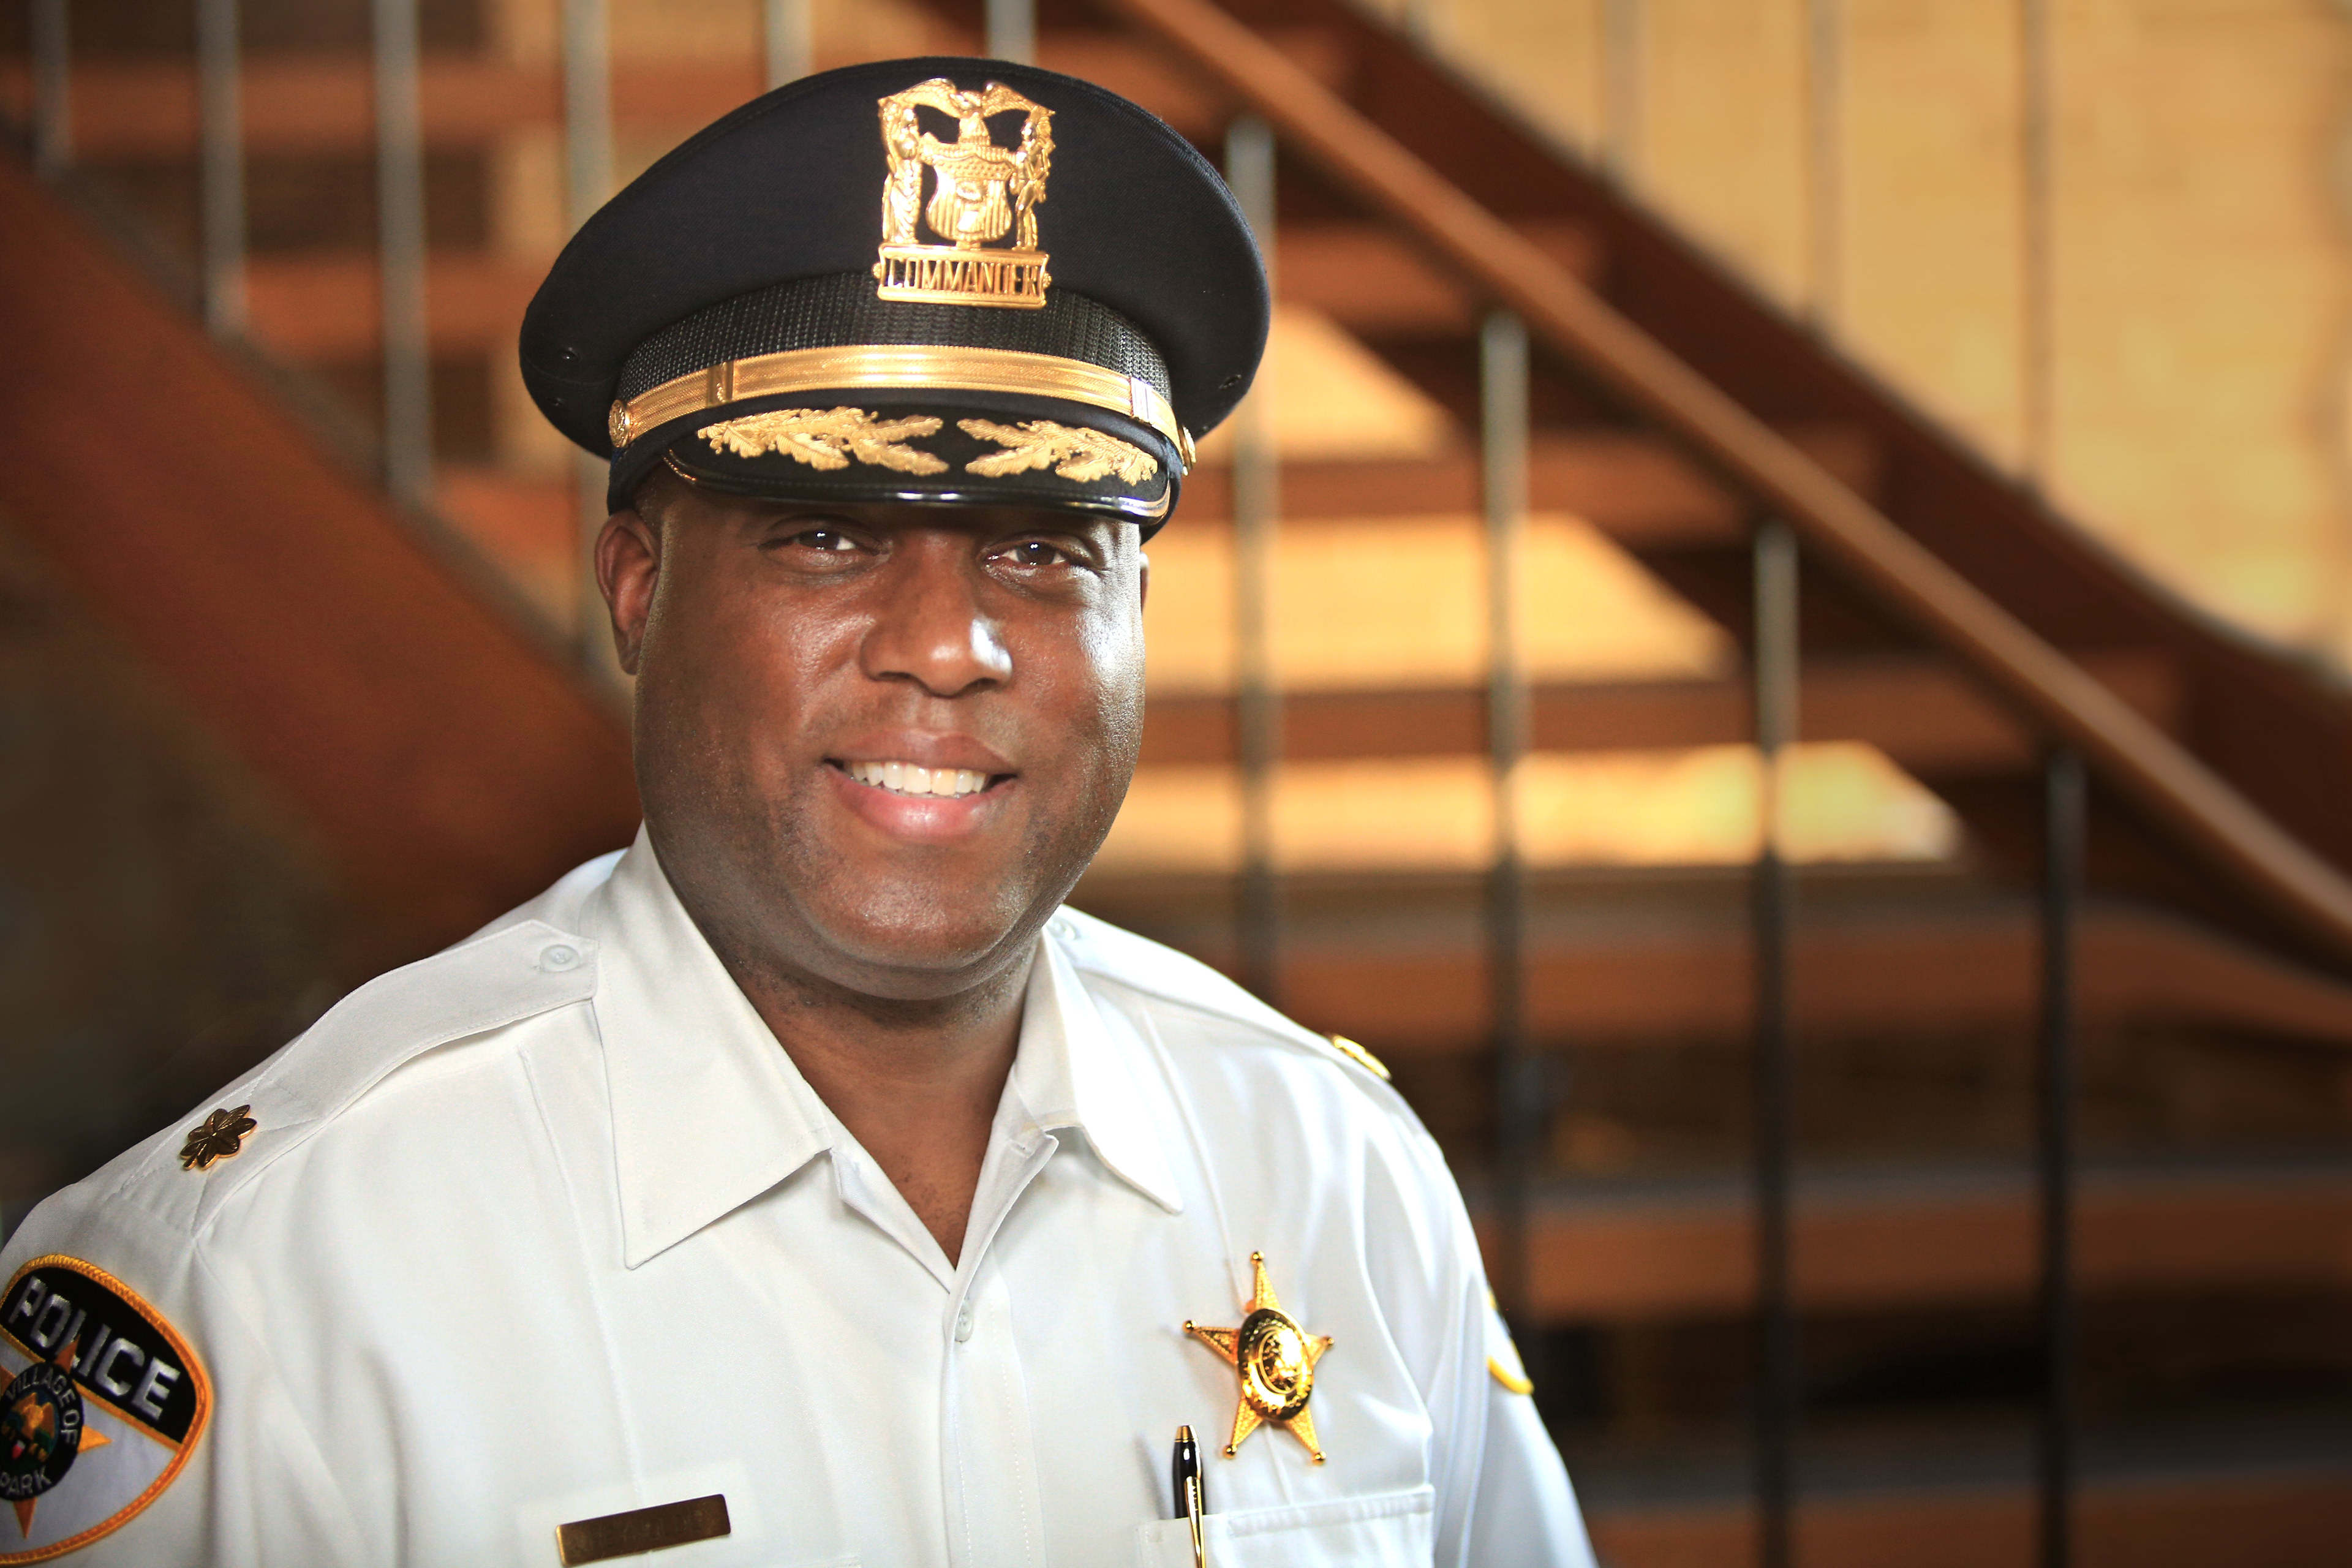 Photograph of Oak Park Deputy Chief LaDon Reynolds